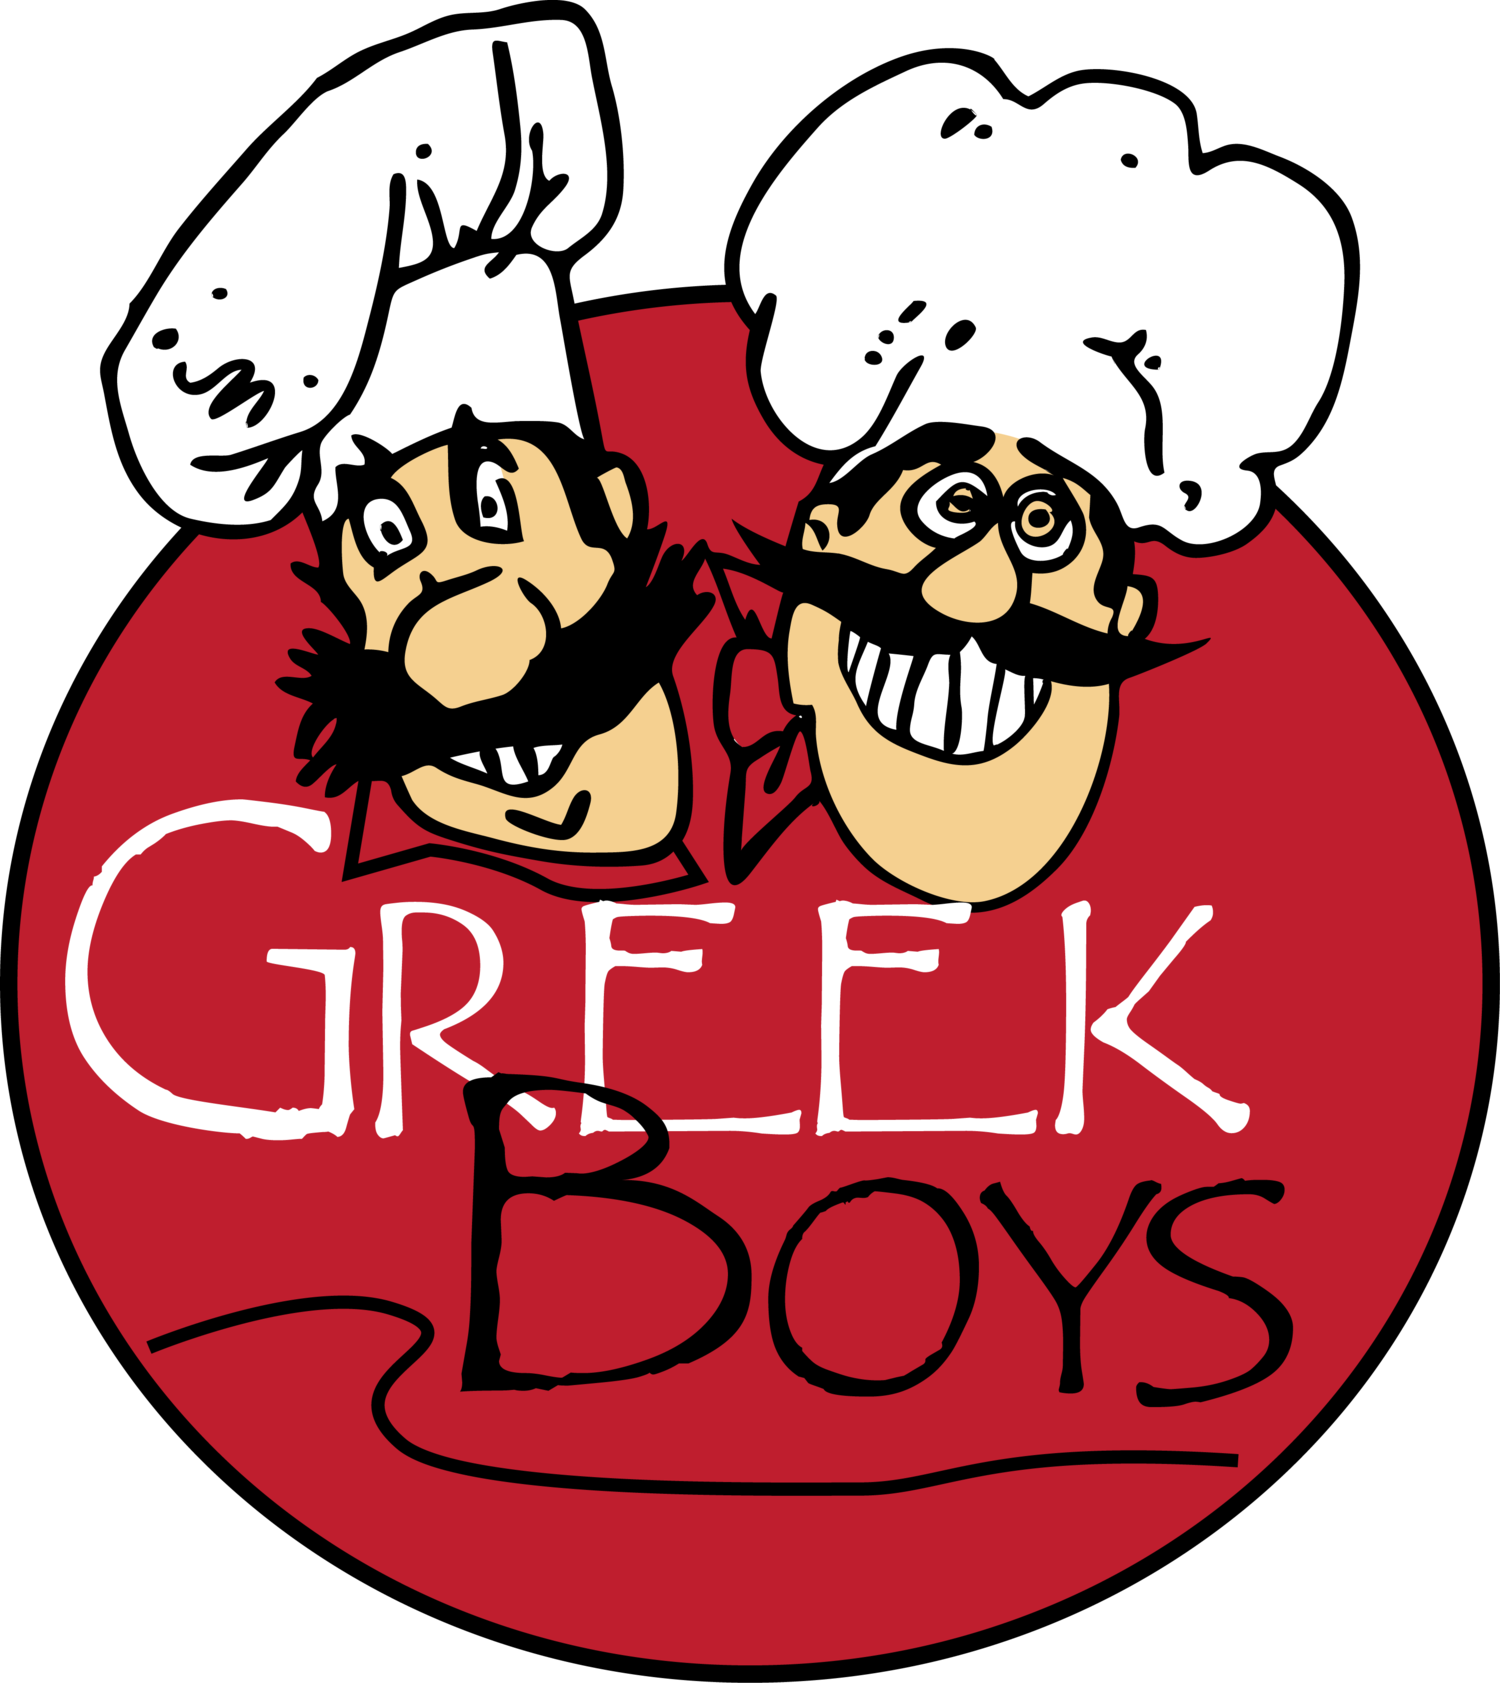 Boys . Greek clipart greek boy